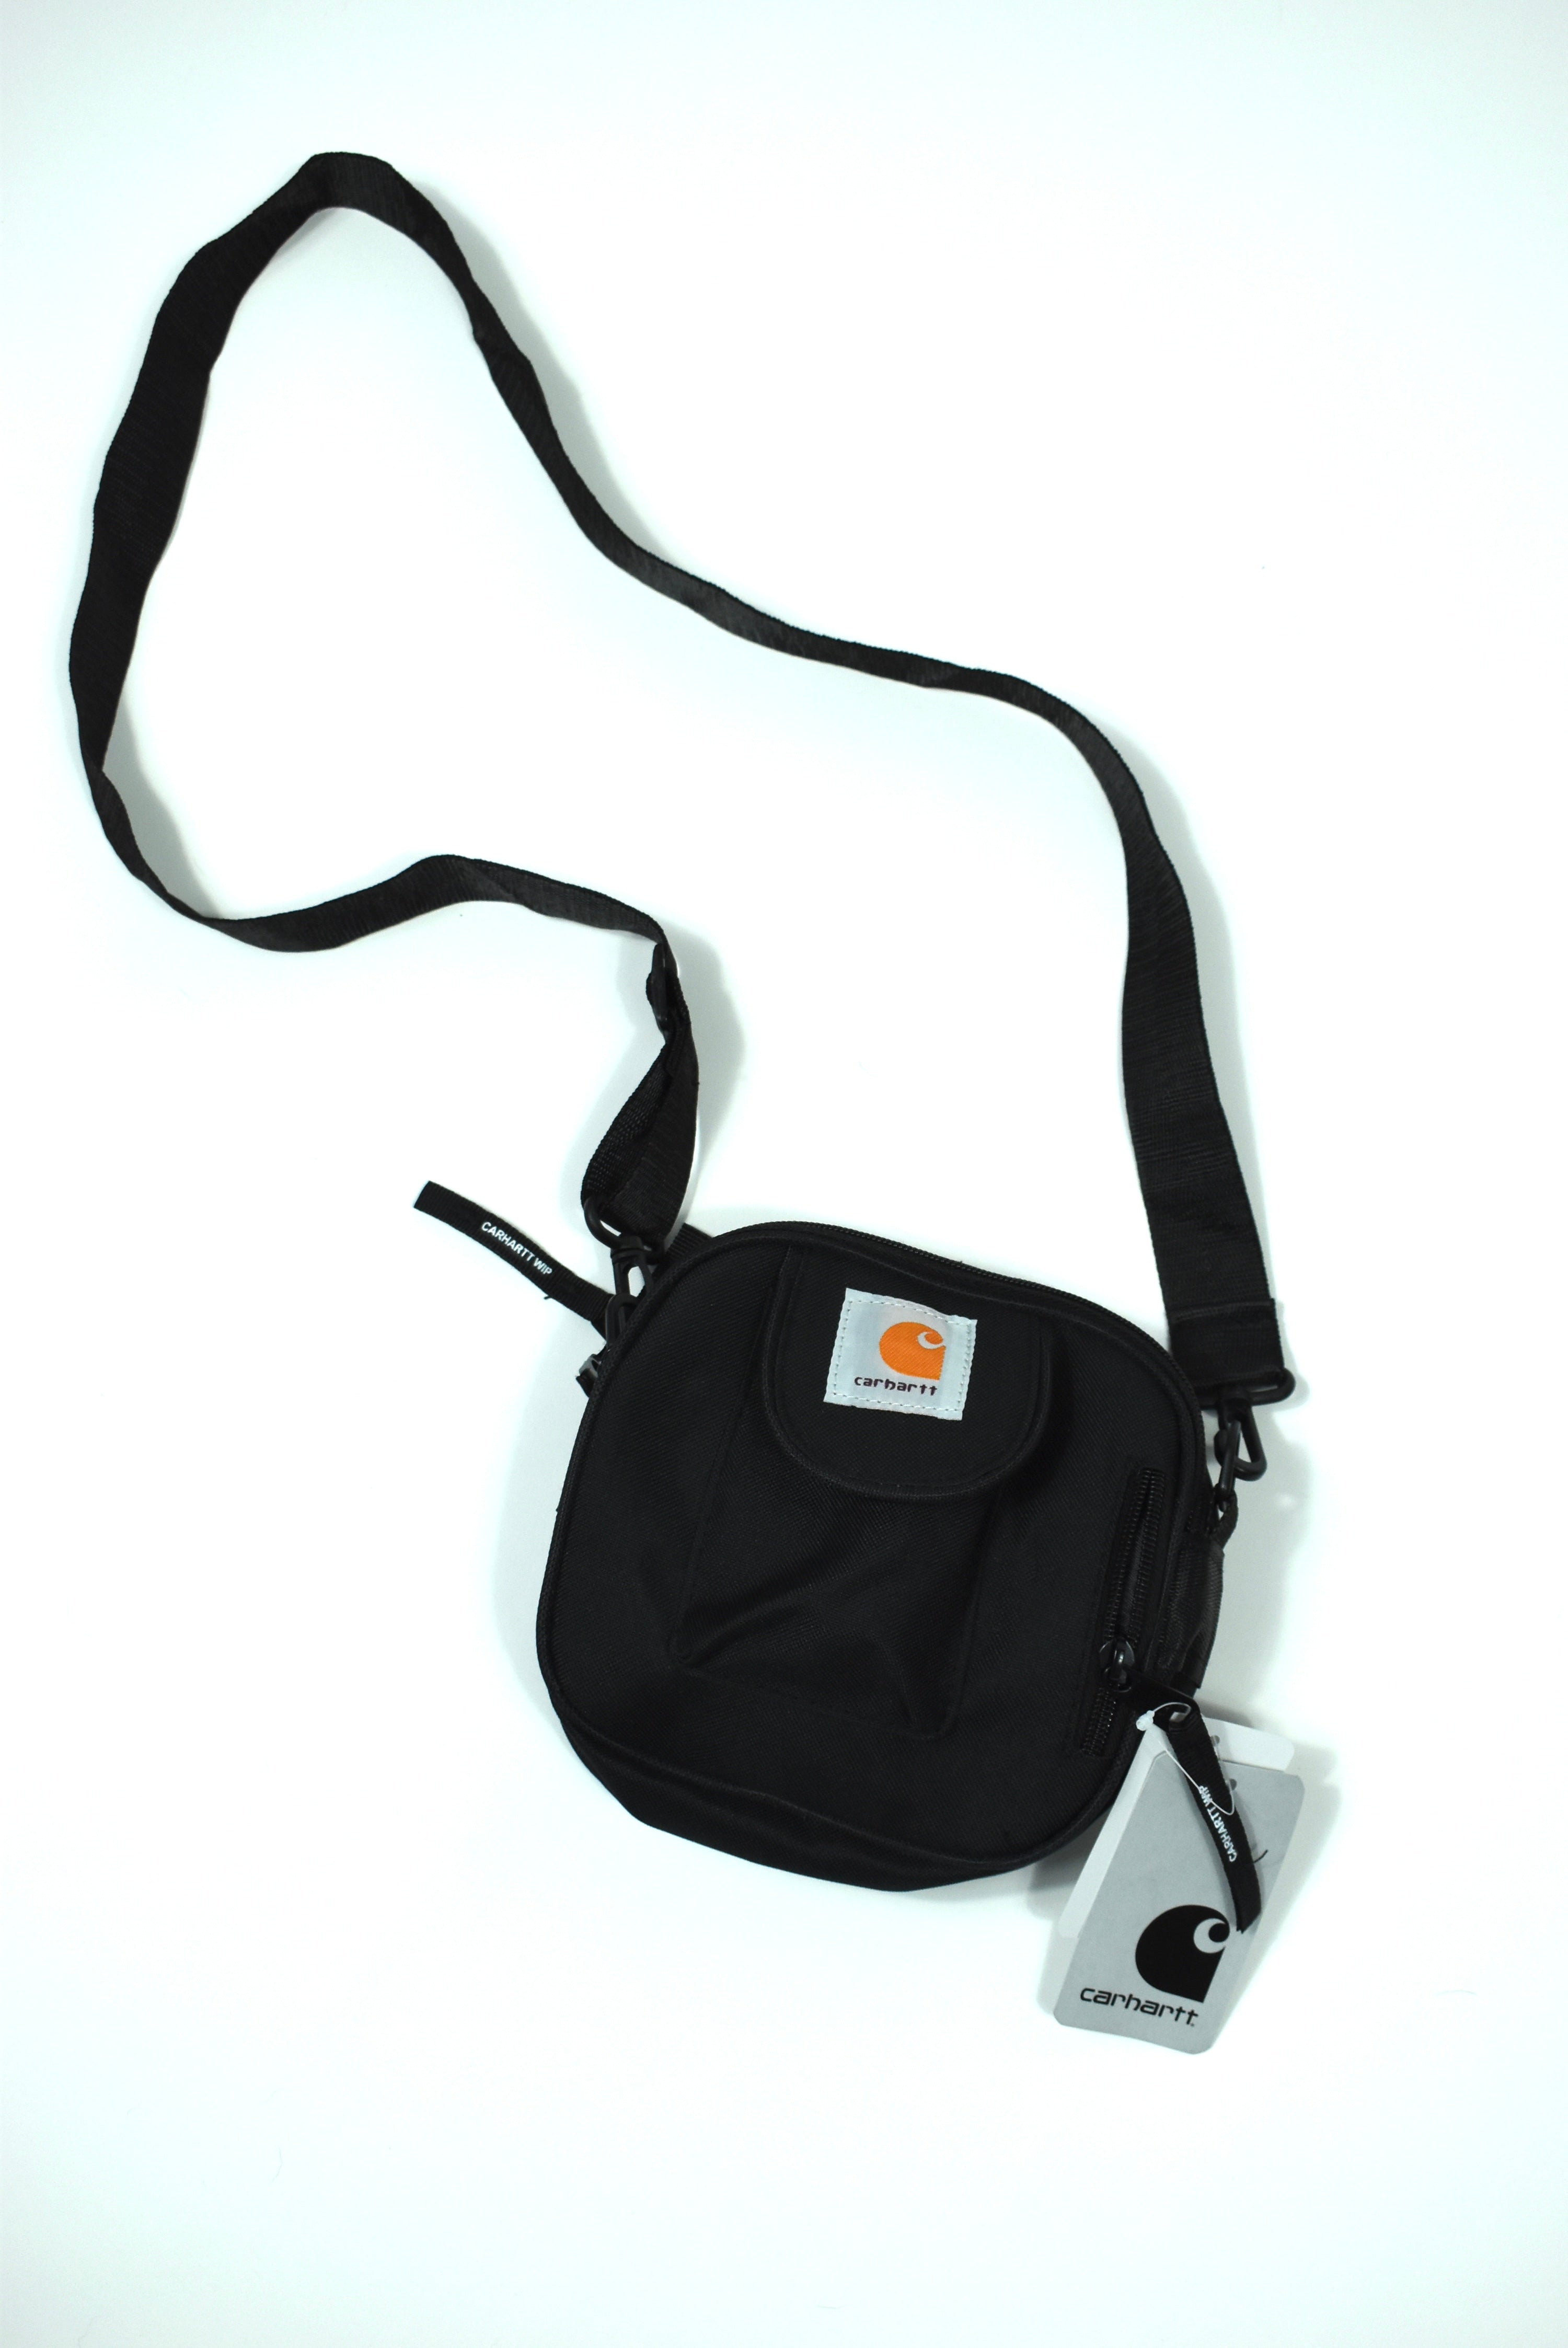 New Carhartt Shoulder Bag/Satchel OS